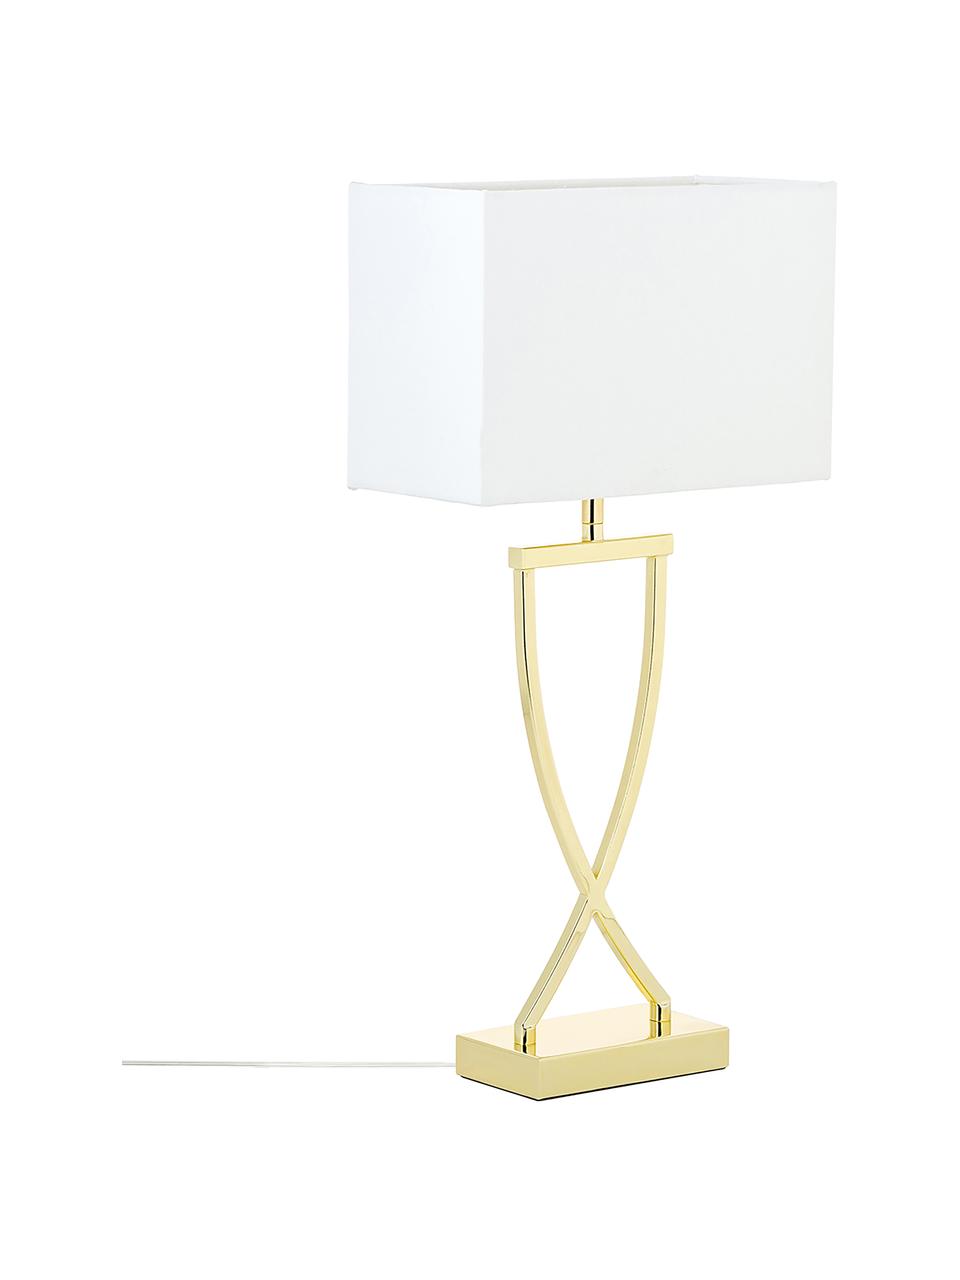 Grote klassieke tafellamp Vanessa in goudkleur, Lampvoet: metaal, Lampenkap: textiel, Goudkleurig, B 27 x H 52 cm